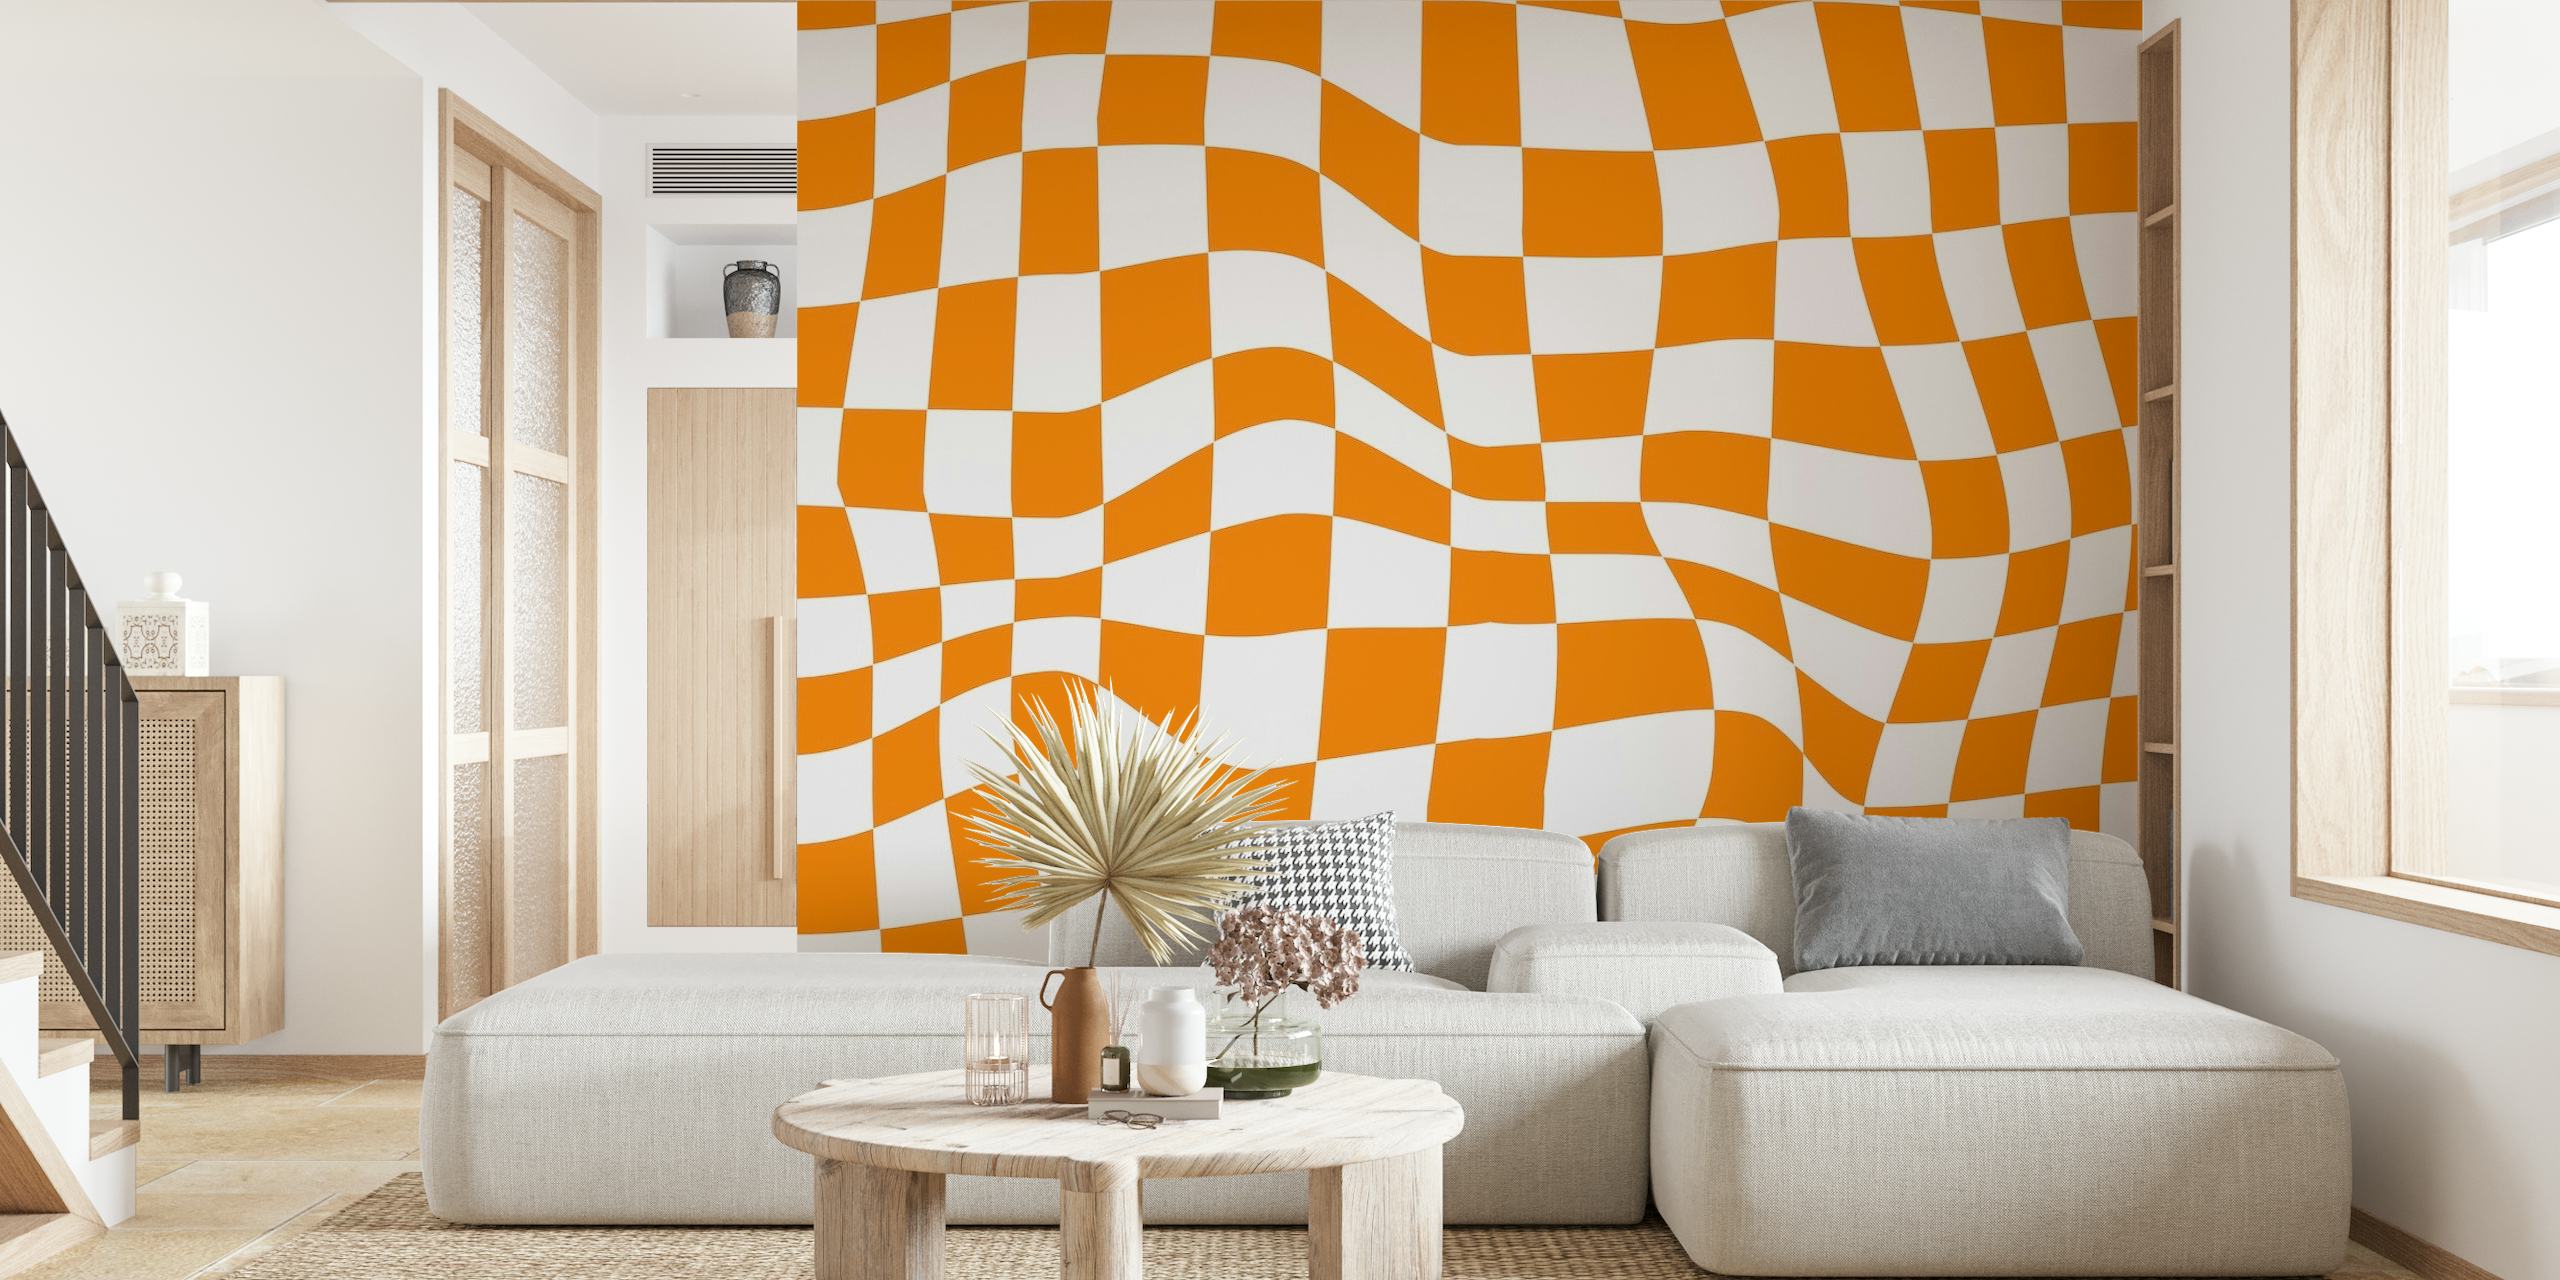 Vivid groovy orange and checkered retro wallpaper